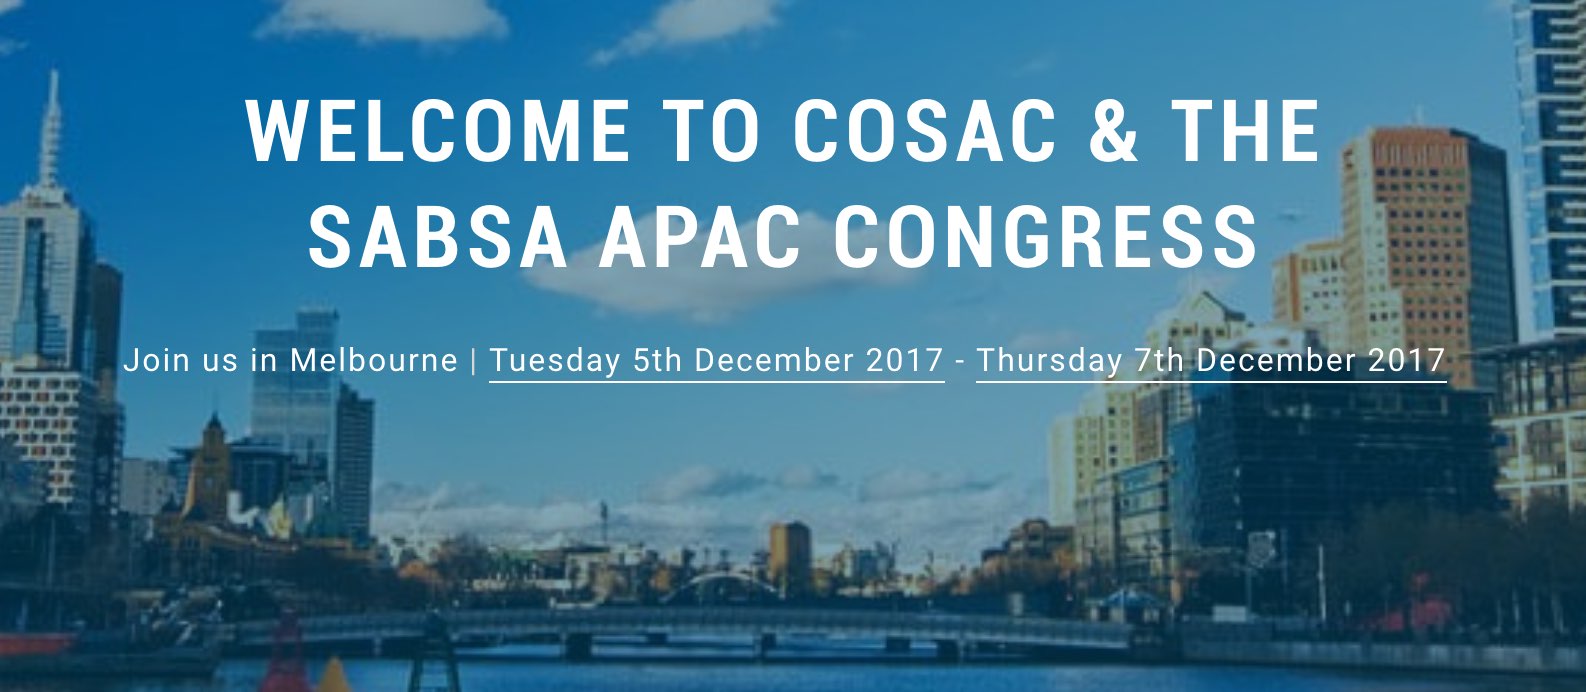 COSAC Security Conference & SABSA APAC Congress